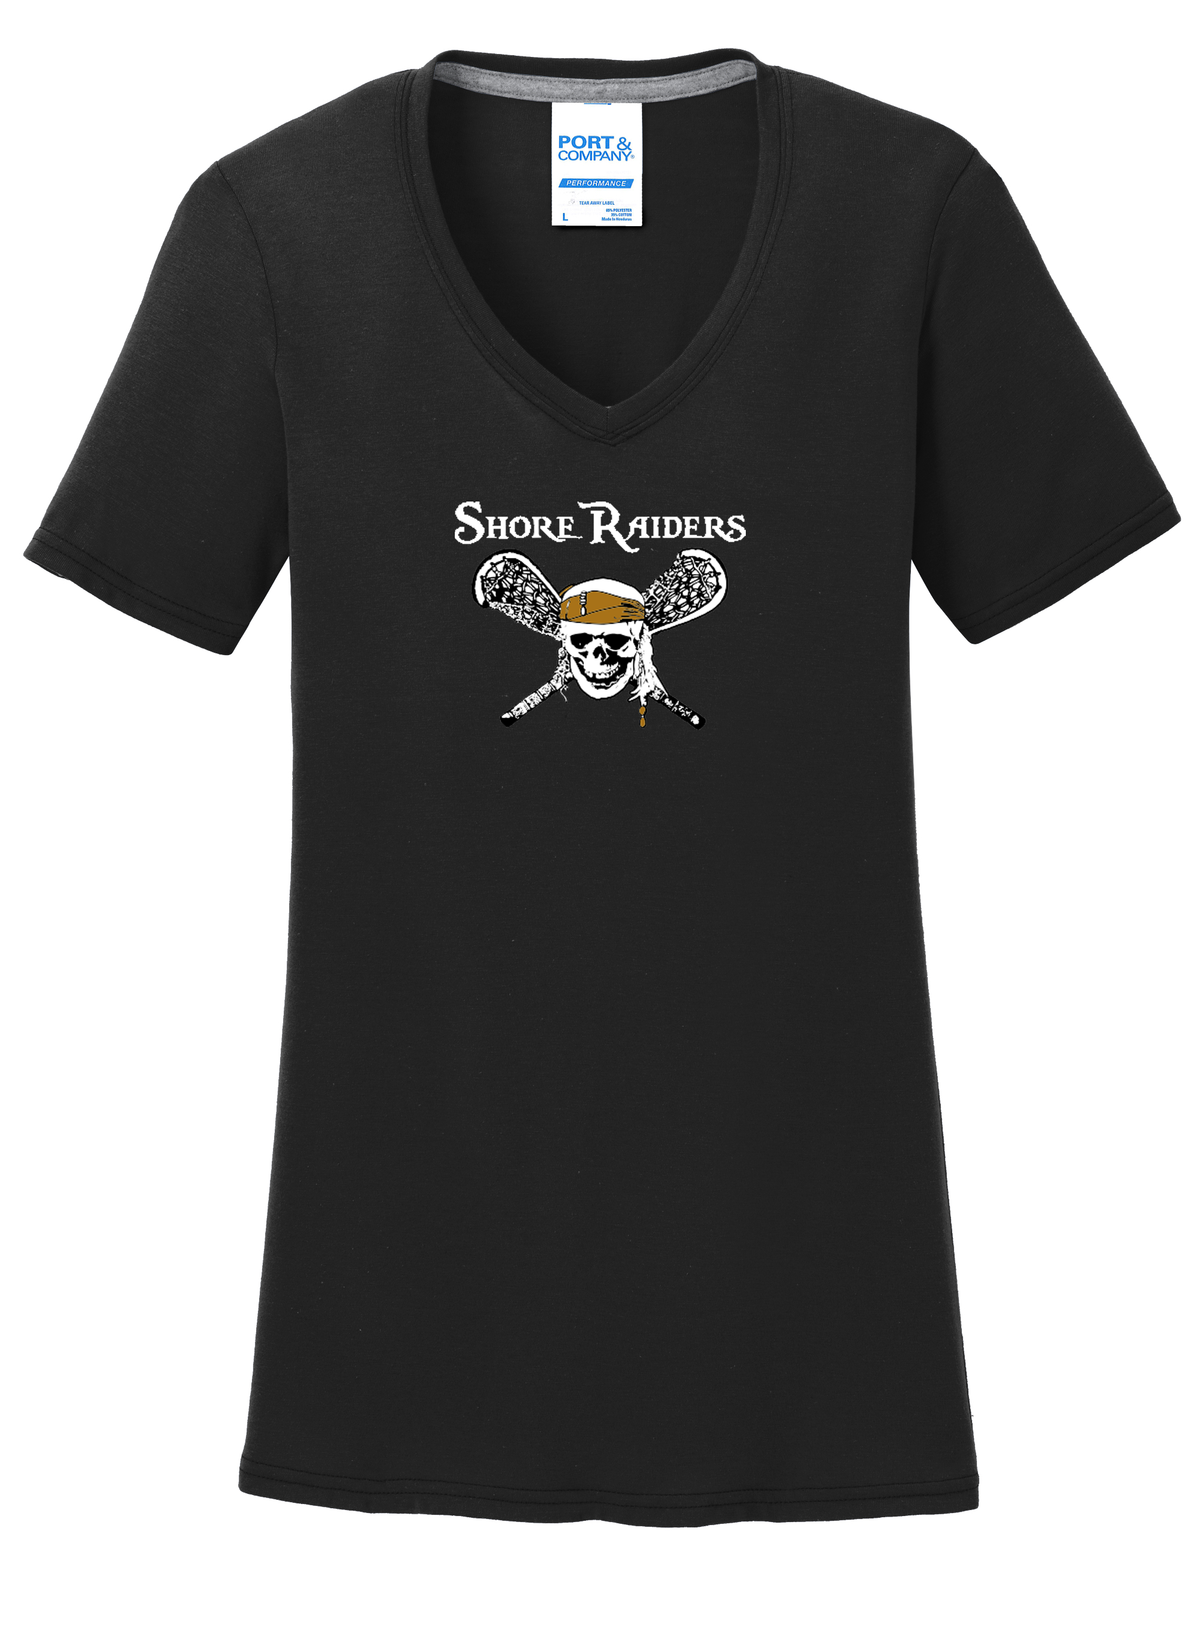 Shore Raiders Lacrosse Women's T-Shirt